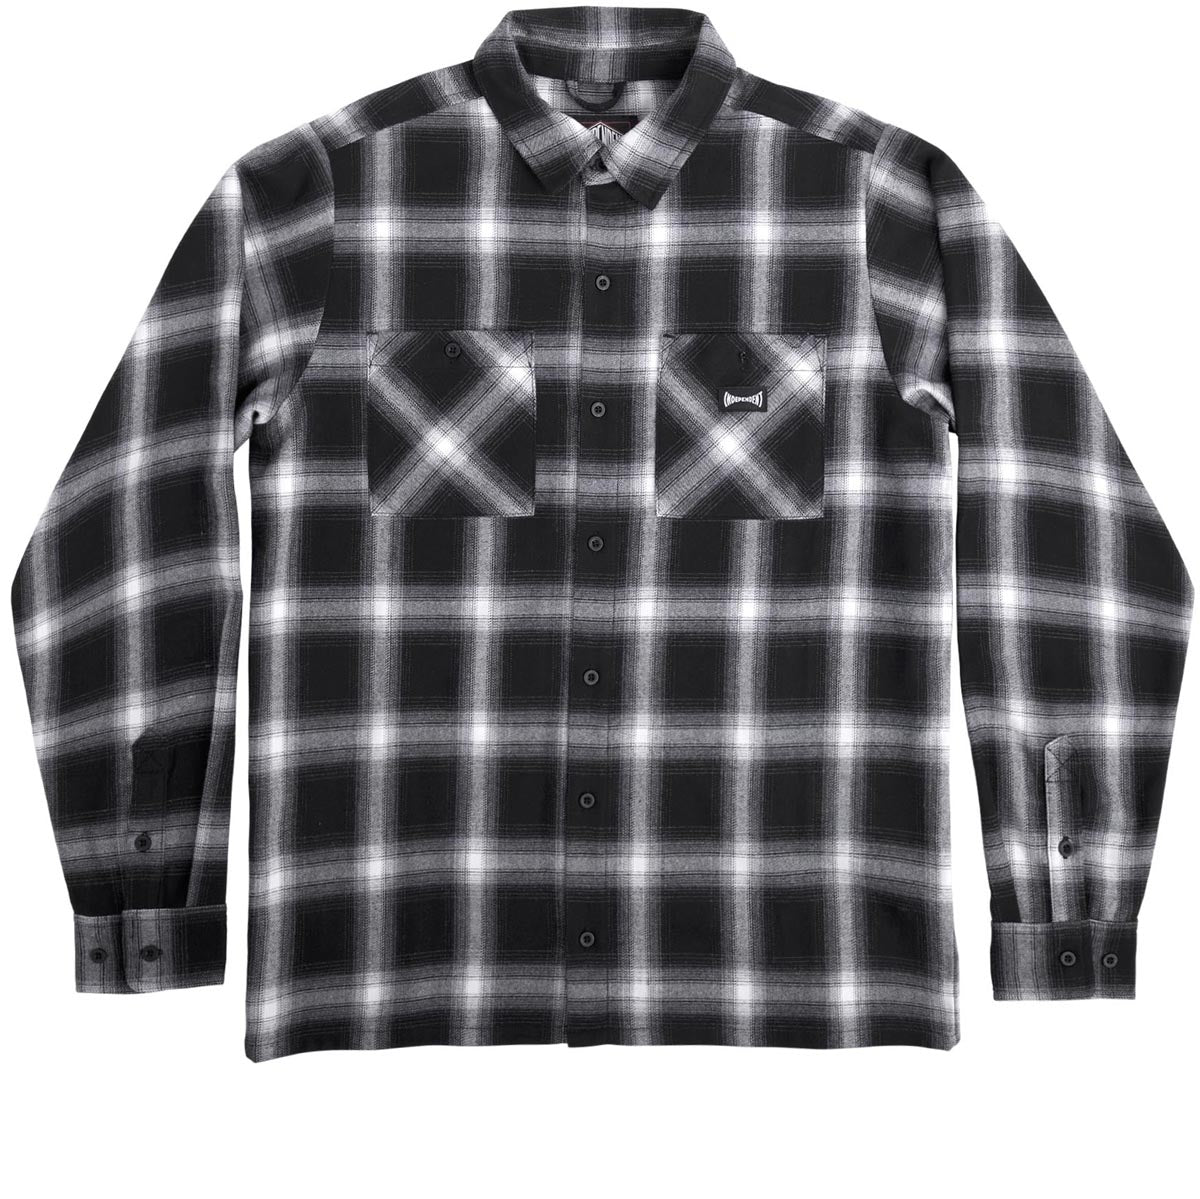 Independent Legacy Flannel Long Sleeve Shirt - Black image 1